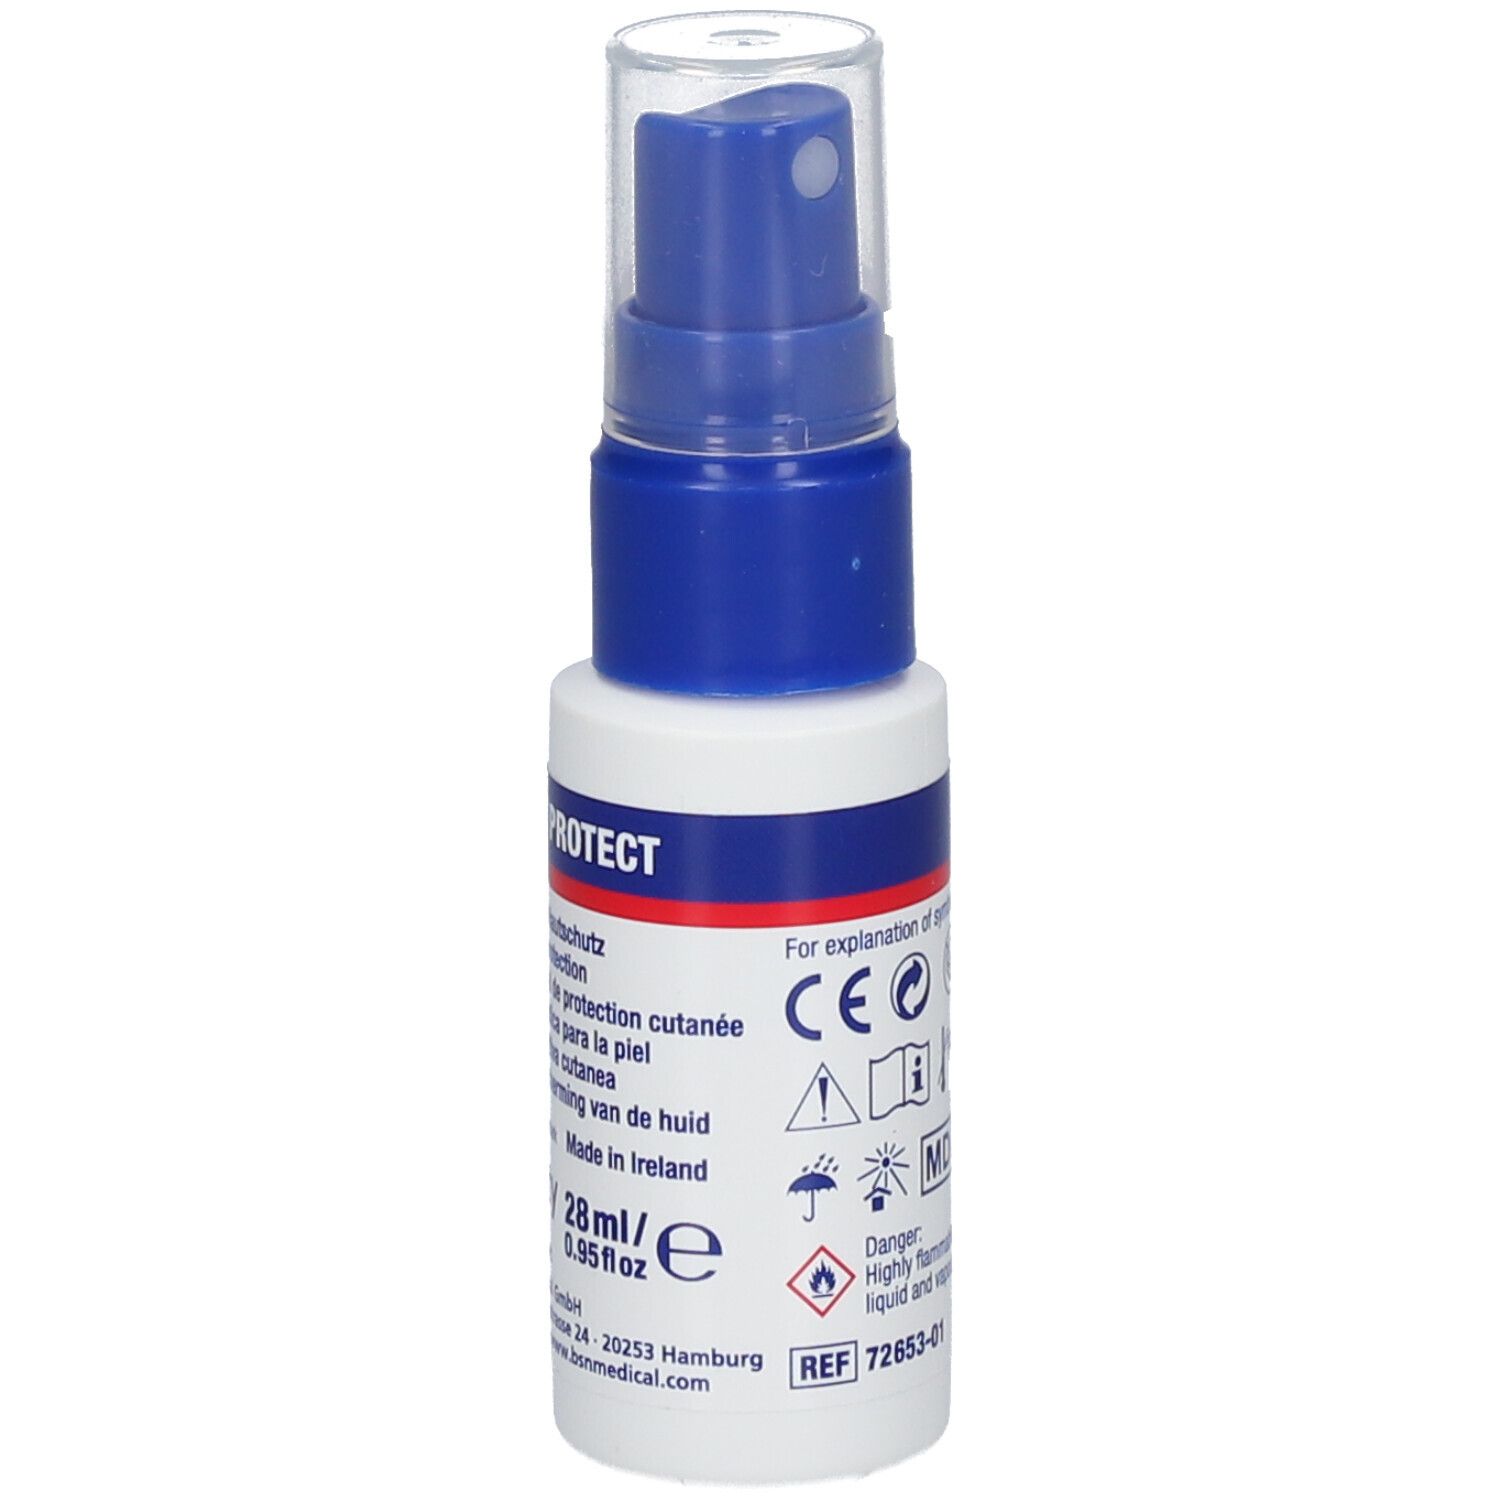 Cutimed® PROTECT Spray